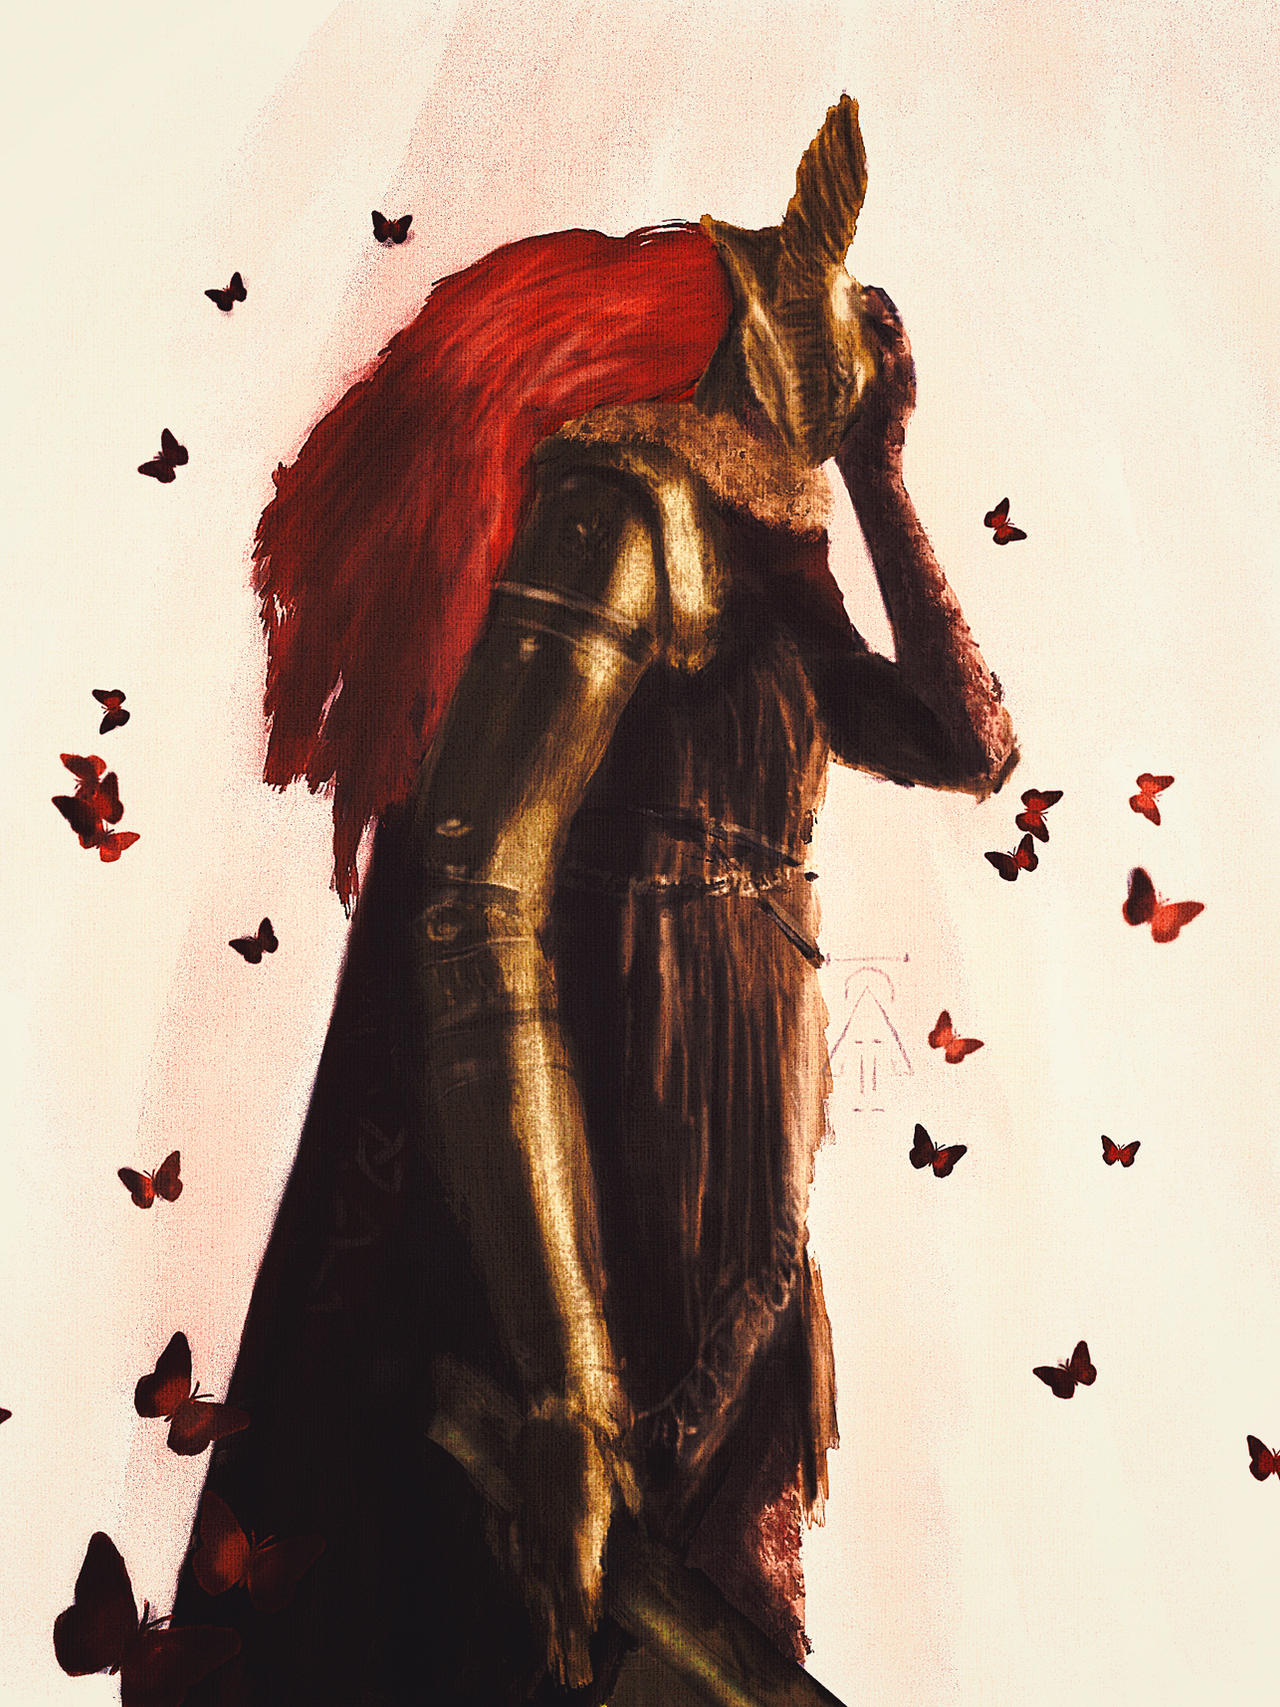 Malenia, Blade of Miquella (Elden Ring) by aransevla on DeviantArt